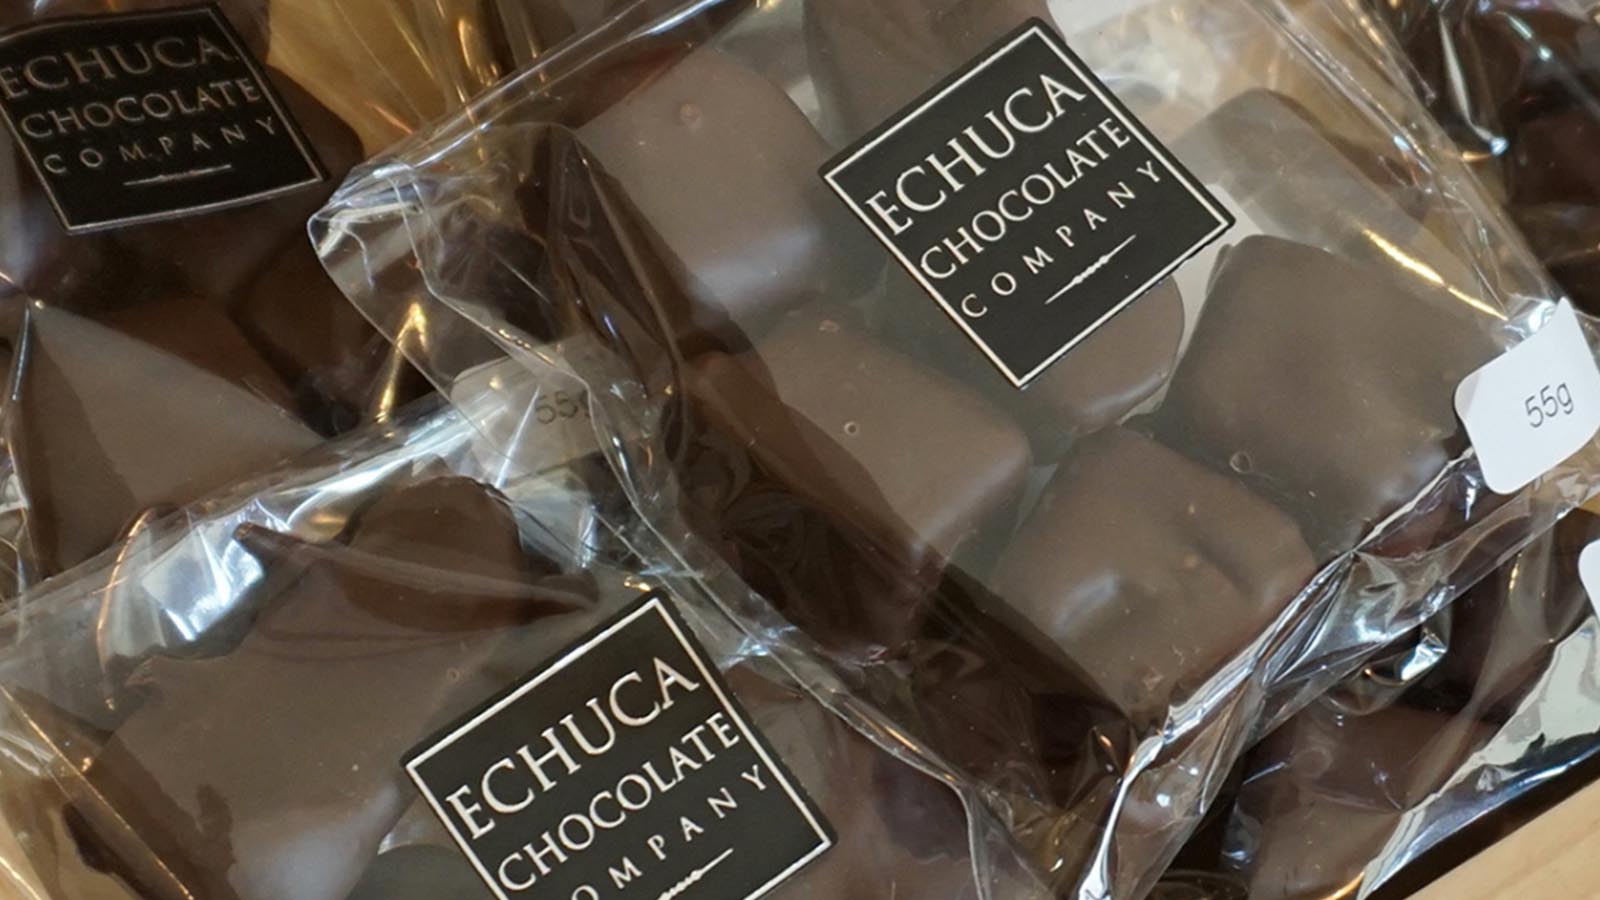 Echuca Chocolate Co packs